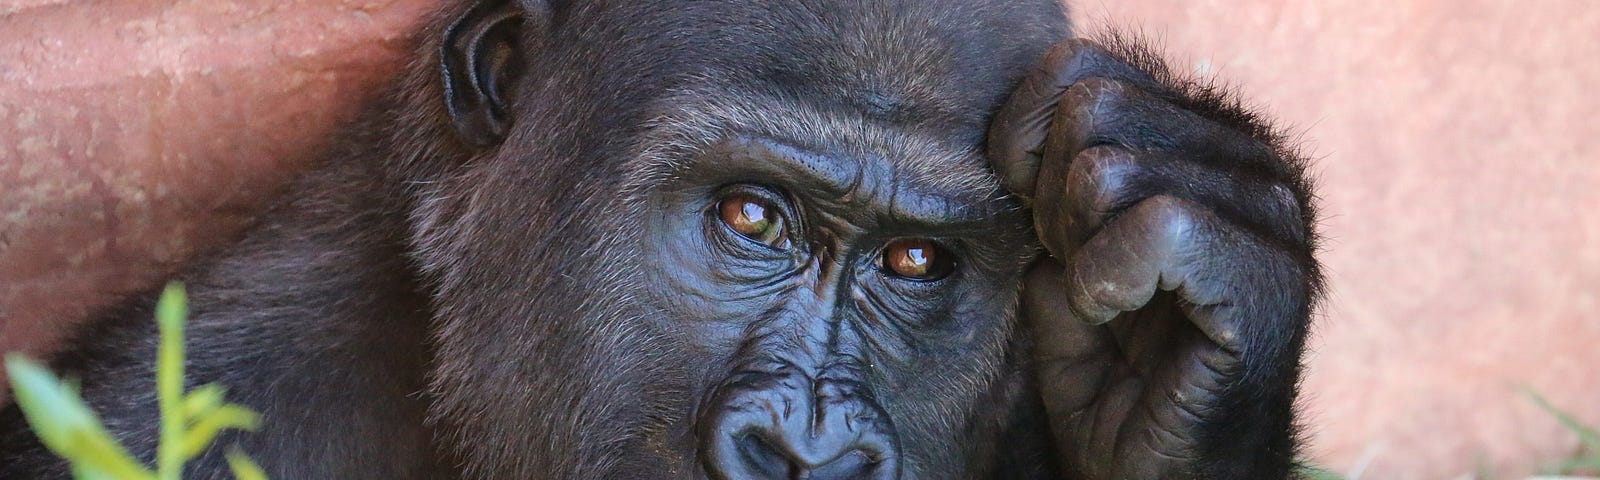 Gorilla thinking about strategic insights